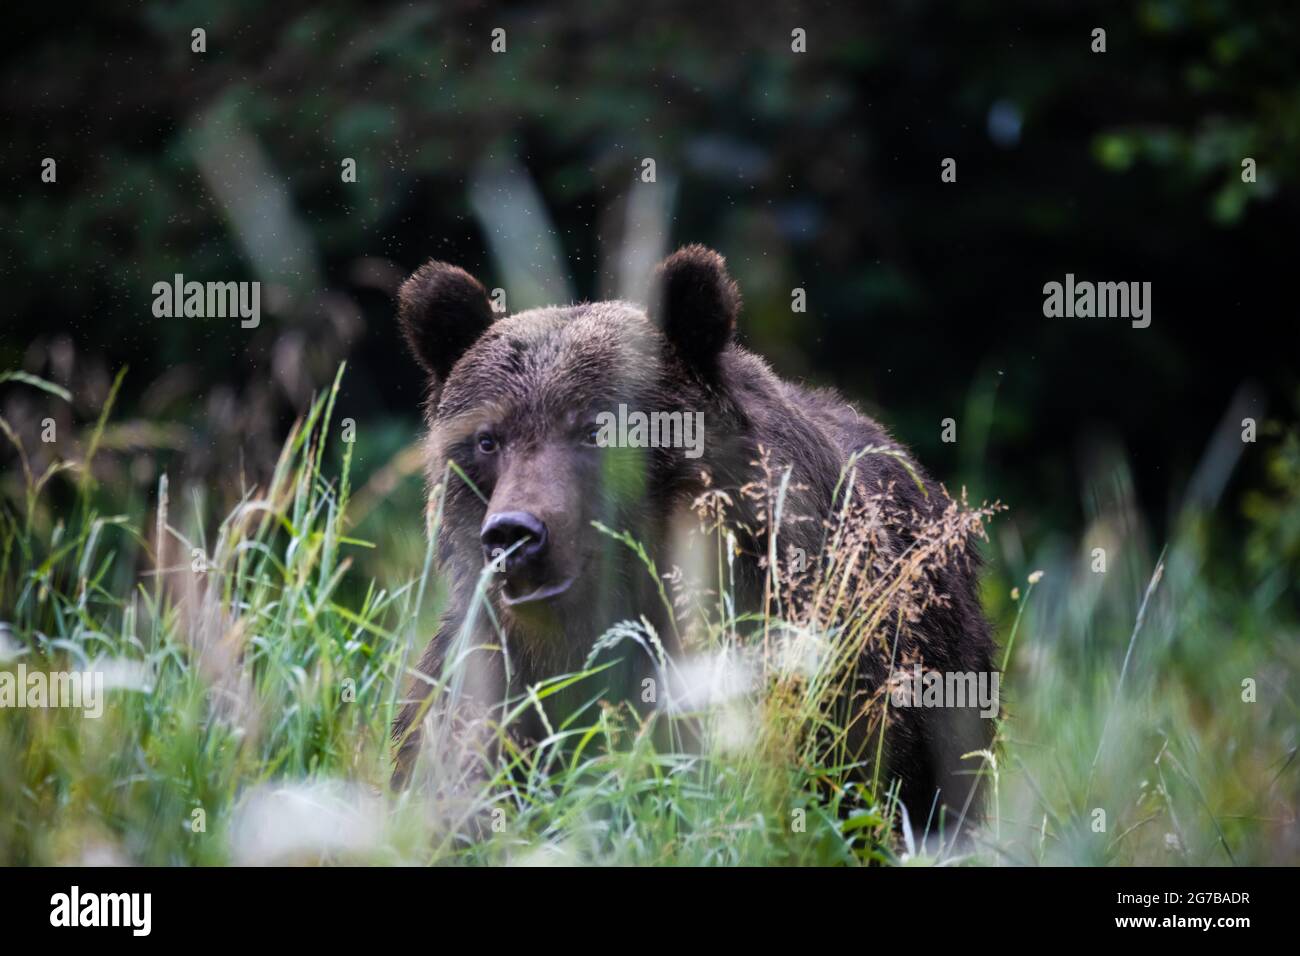 Braunbär (Ursus arctos), auf der Wiese, Bieszczady, Polen Stockfoto